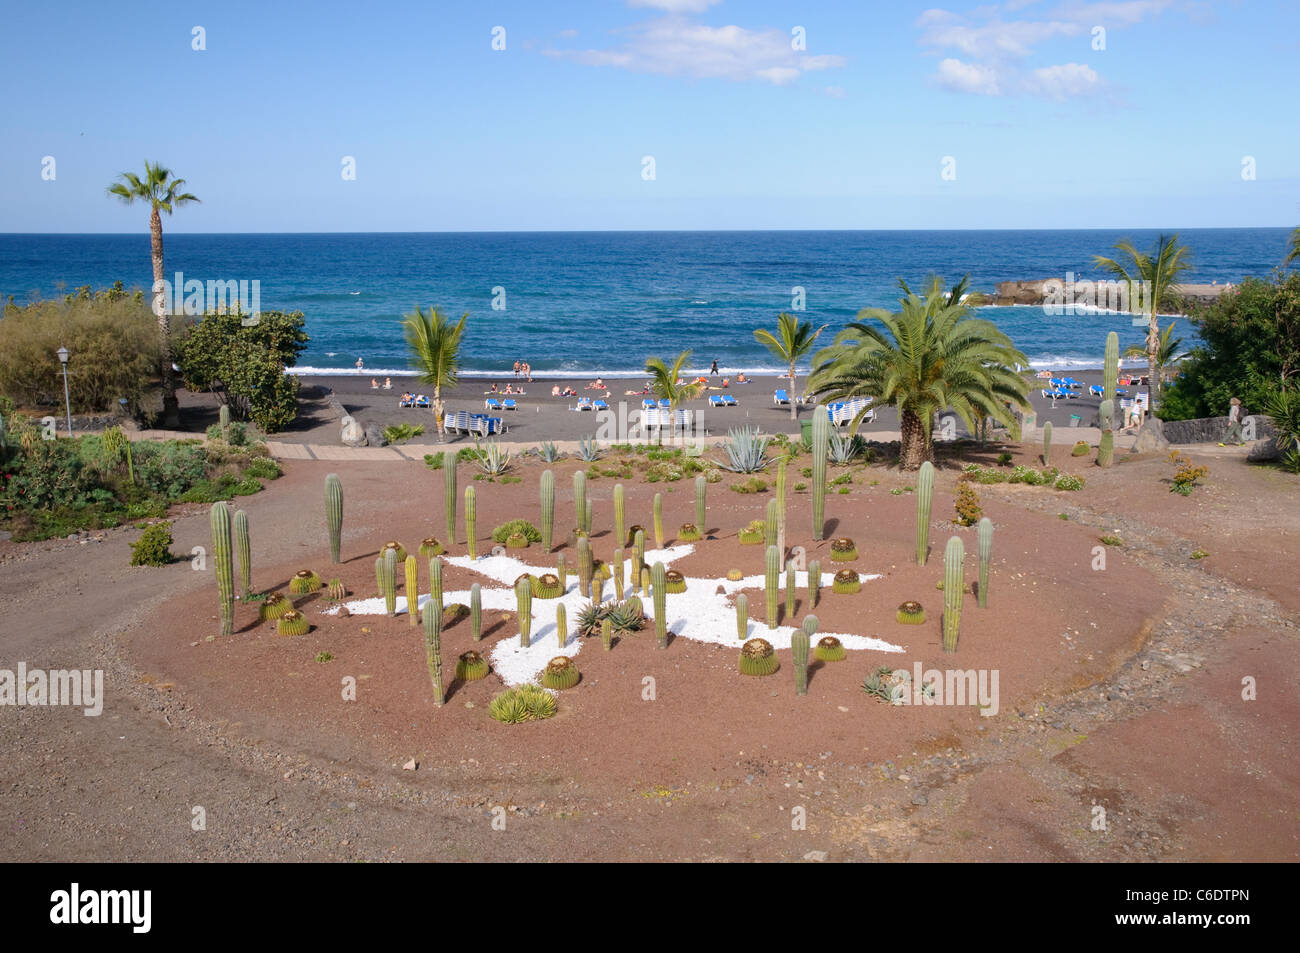 Playa Jardin, Puerto de la Cruz, Tenerife, Canaries, Espagne, Europe Banque D'Images